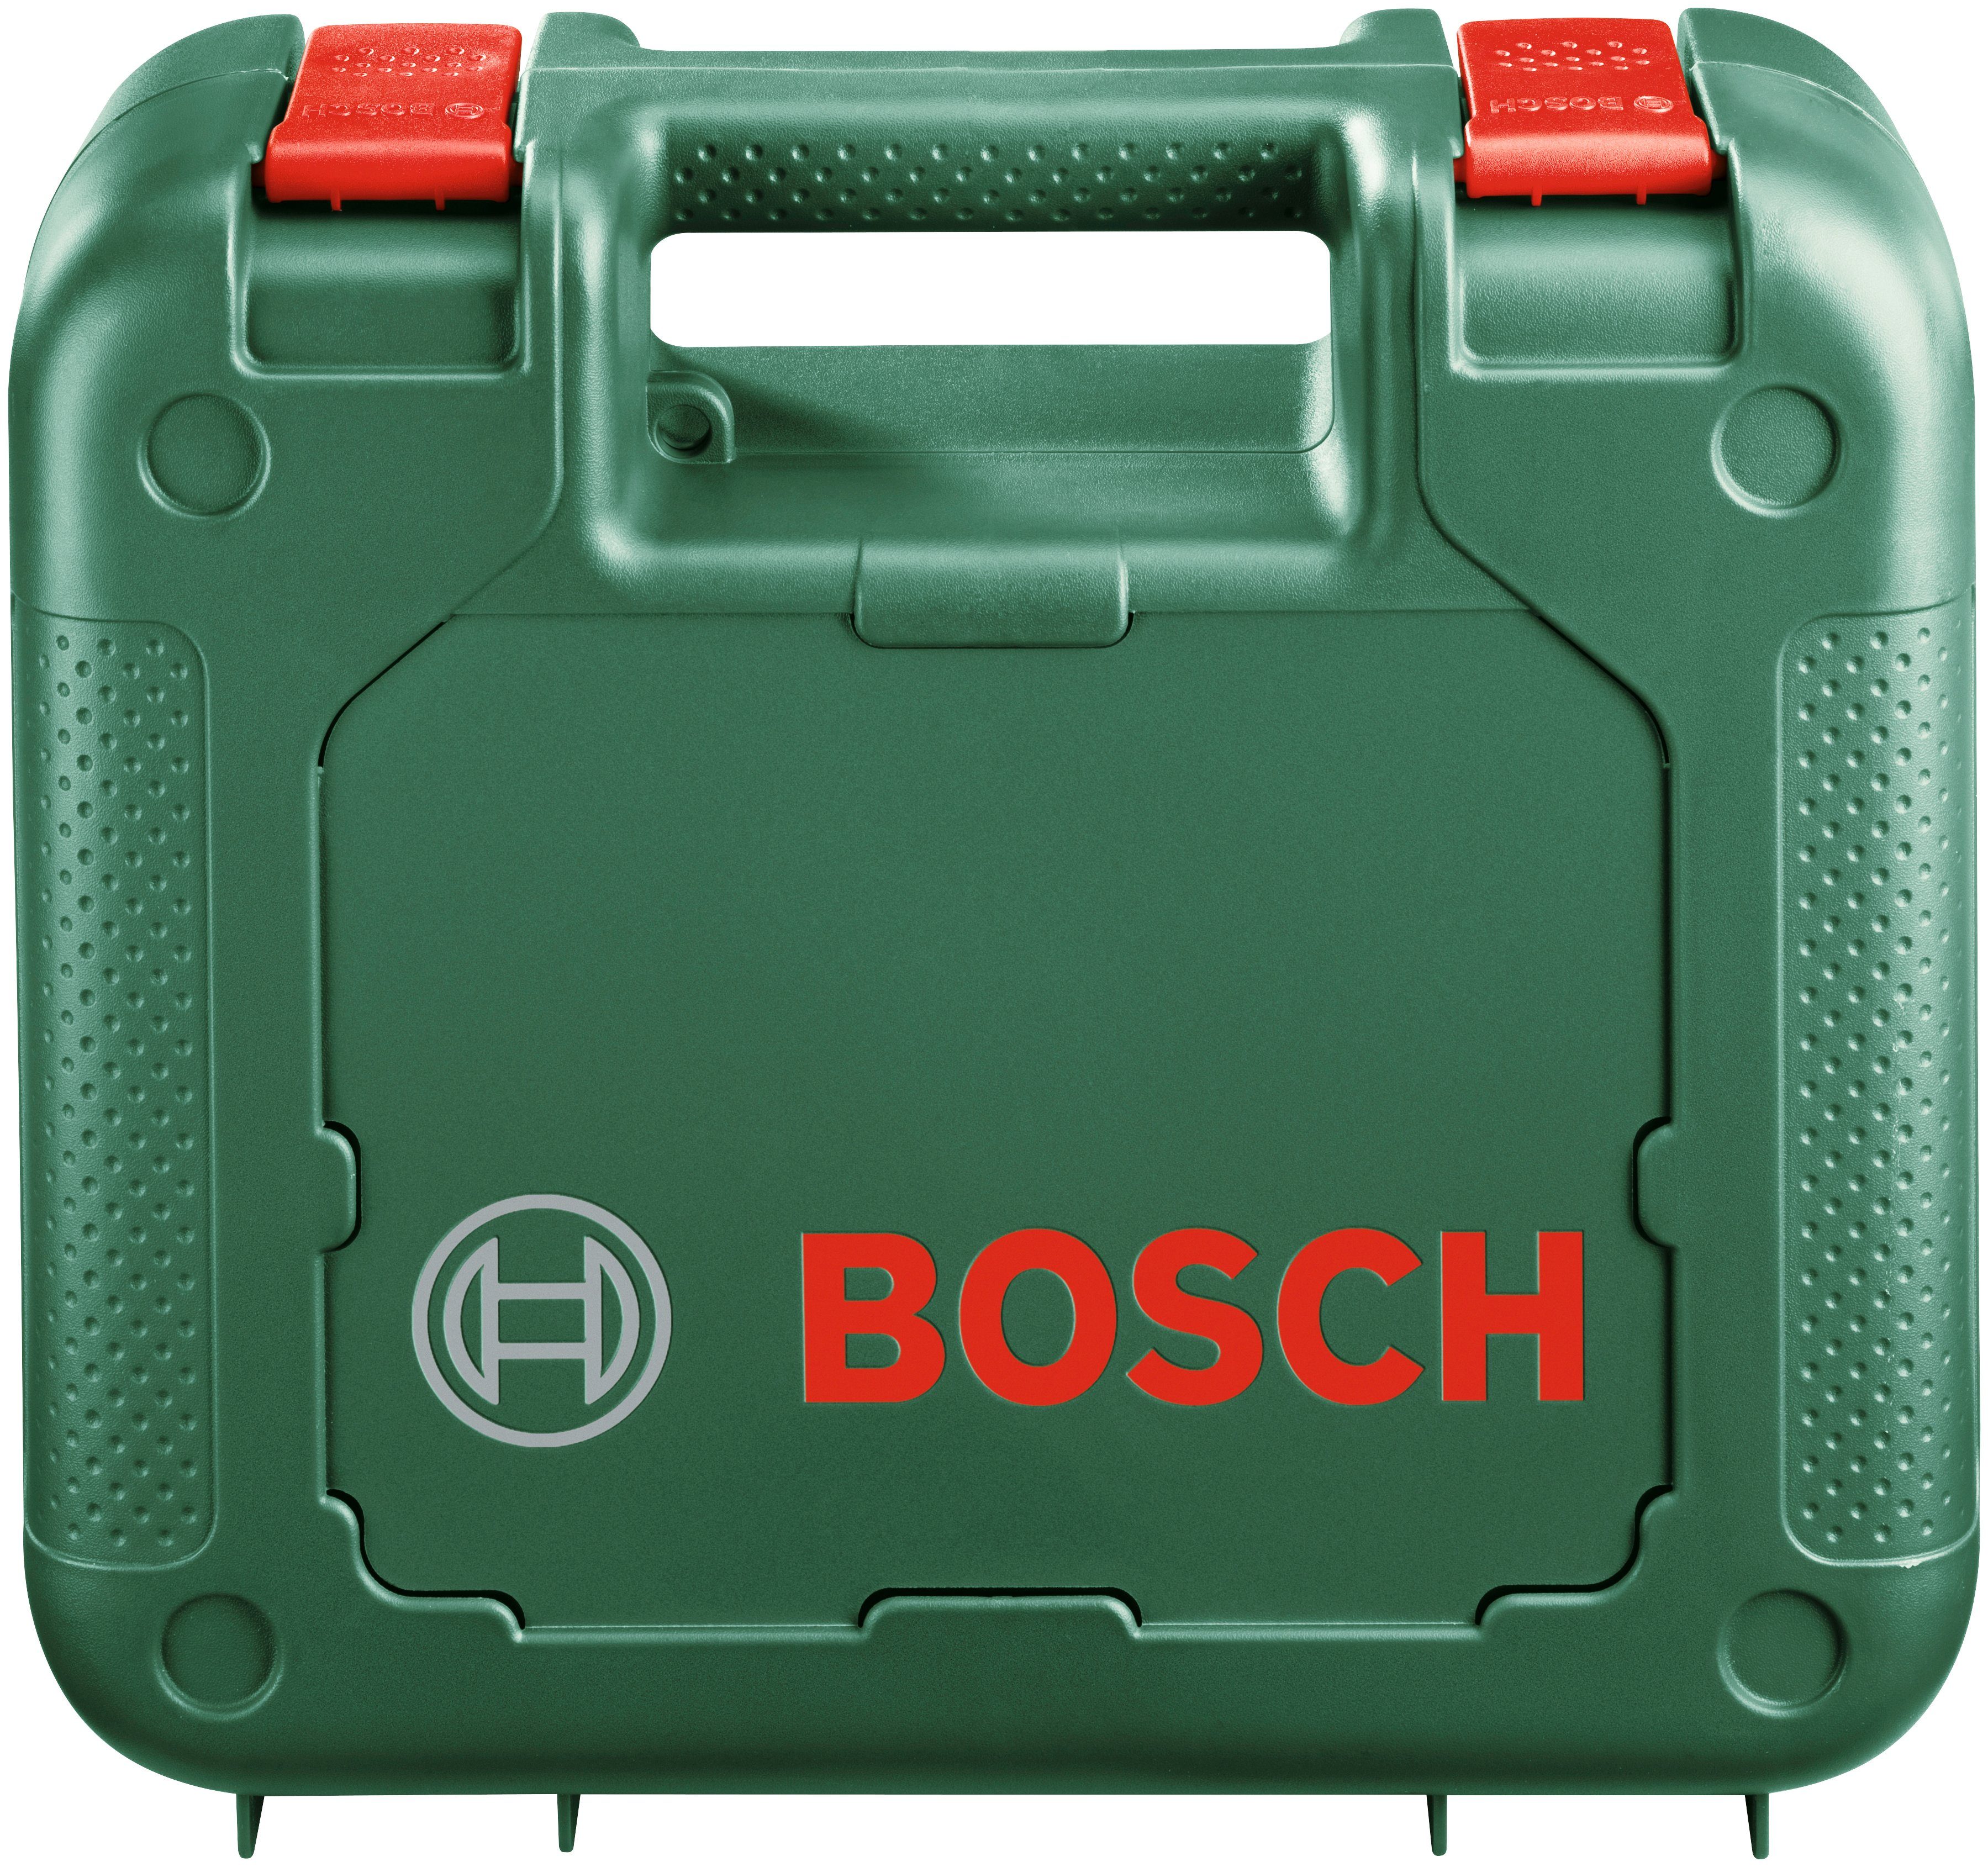 & Home mit Mikro Lader und U/min, Bosch Bit-Set Select, Garden 210 Akku-Bohrschrauber (Set), integriertem PSR USB max.